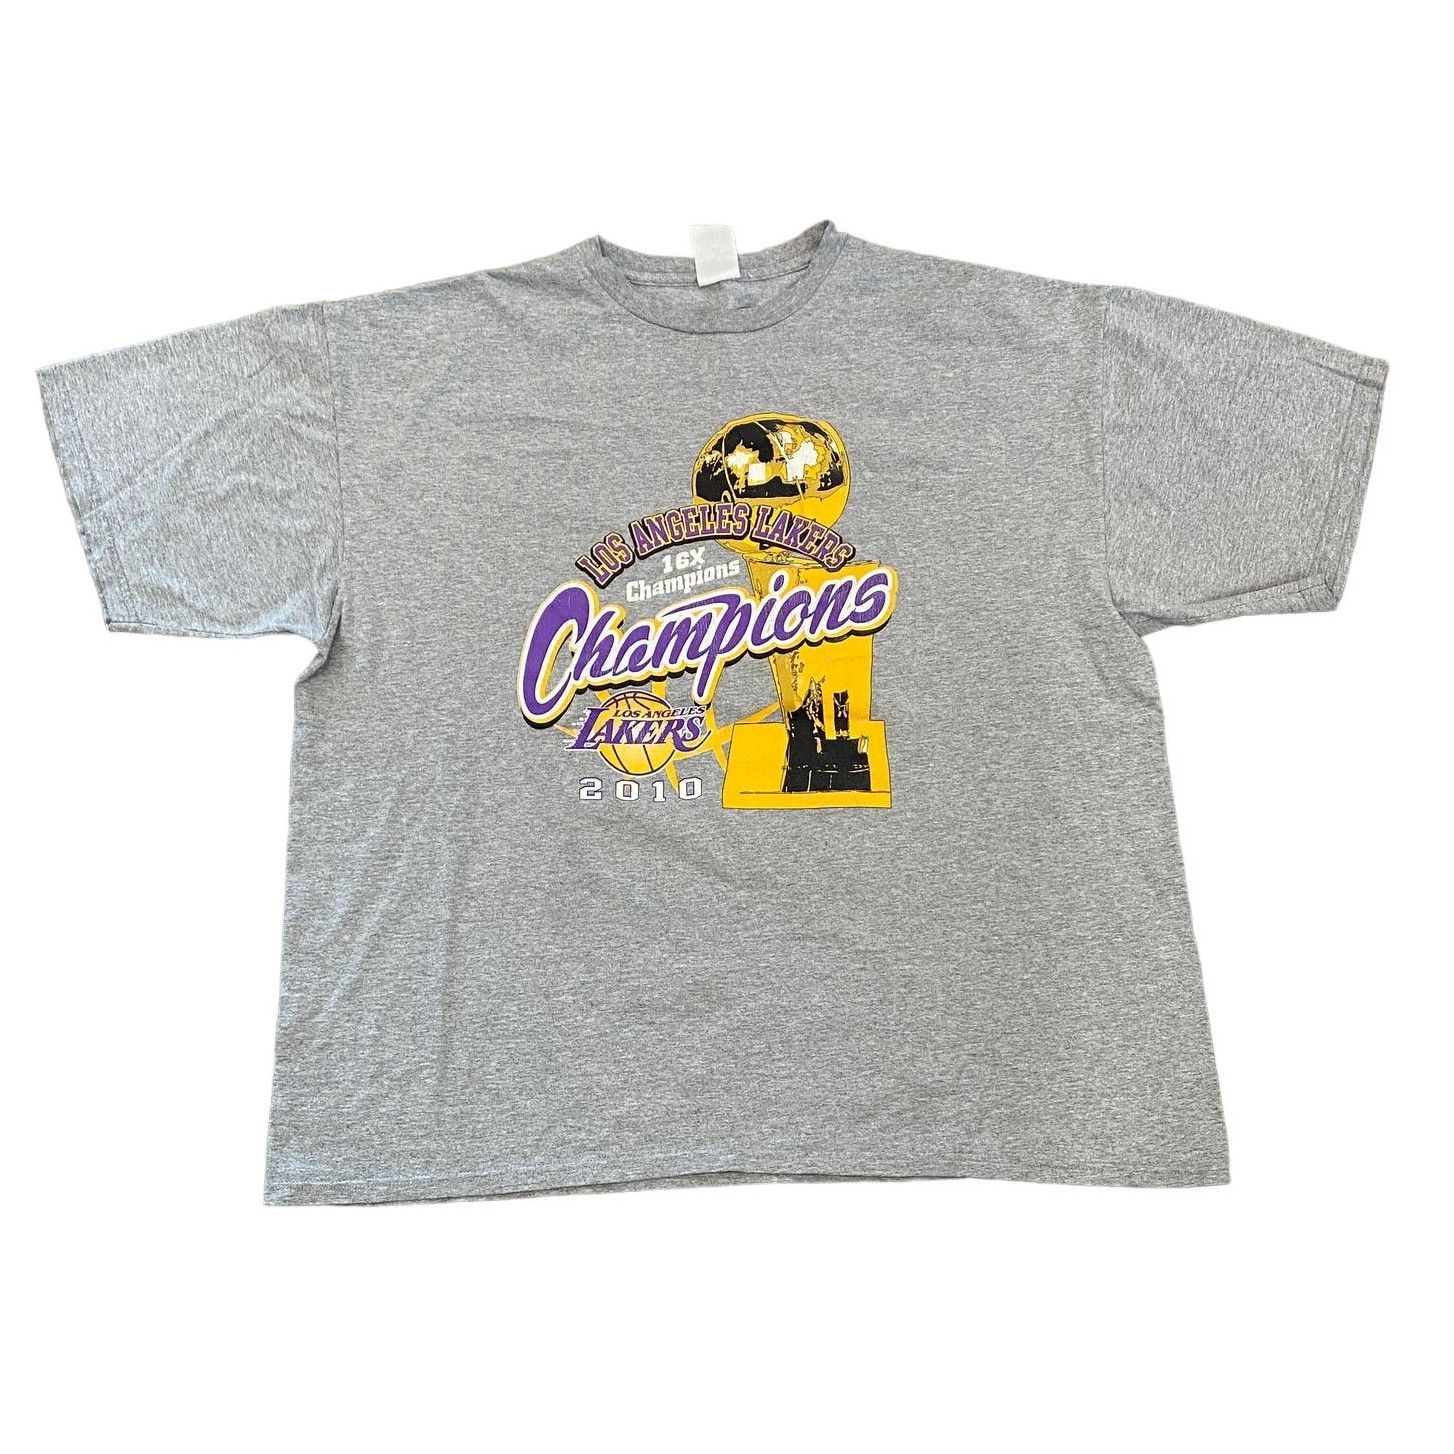 L.A. Lakers LA Lakers 2010 Back to Back NBA Champions T Shirt Men's L Size US L / EU 52-54 / 3 - 1 Preview